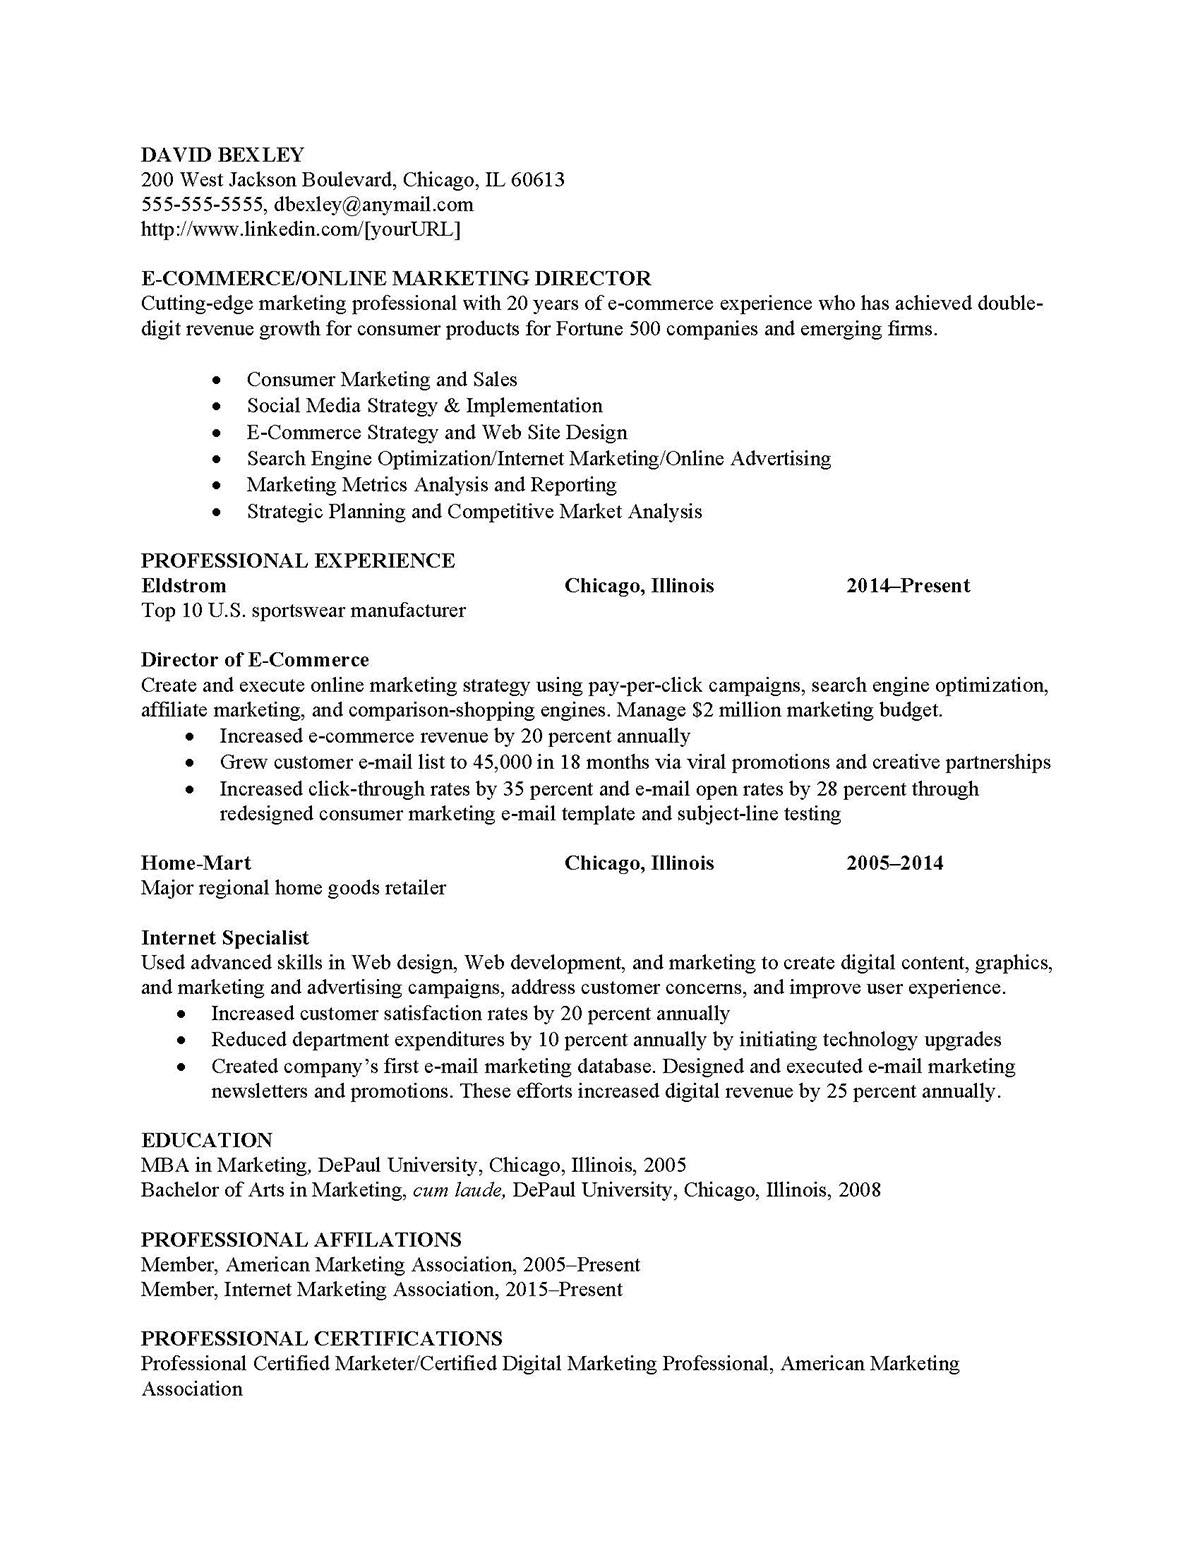 Sample resume: Marketing, High Experience, Combination